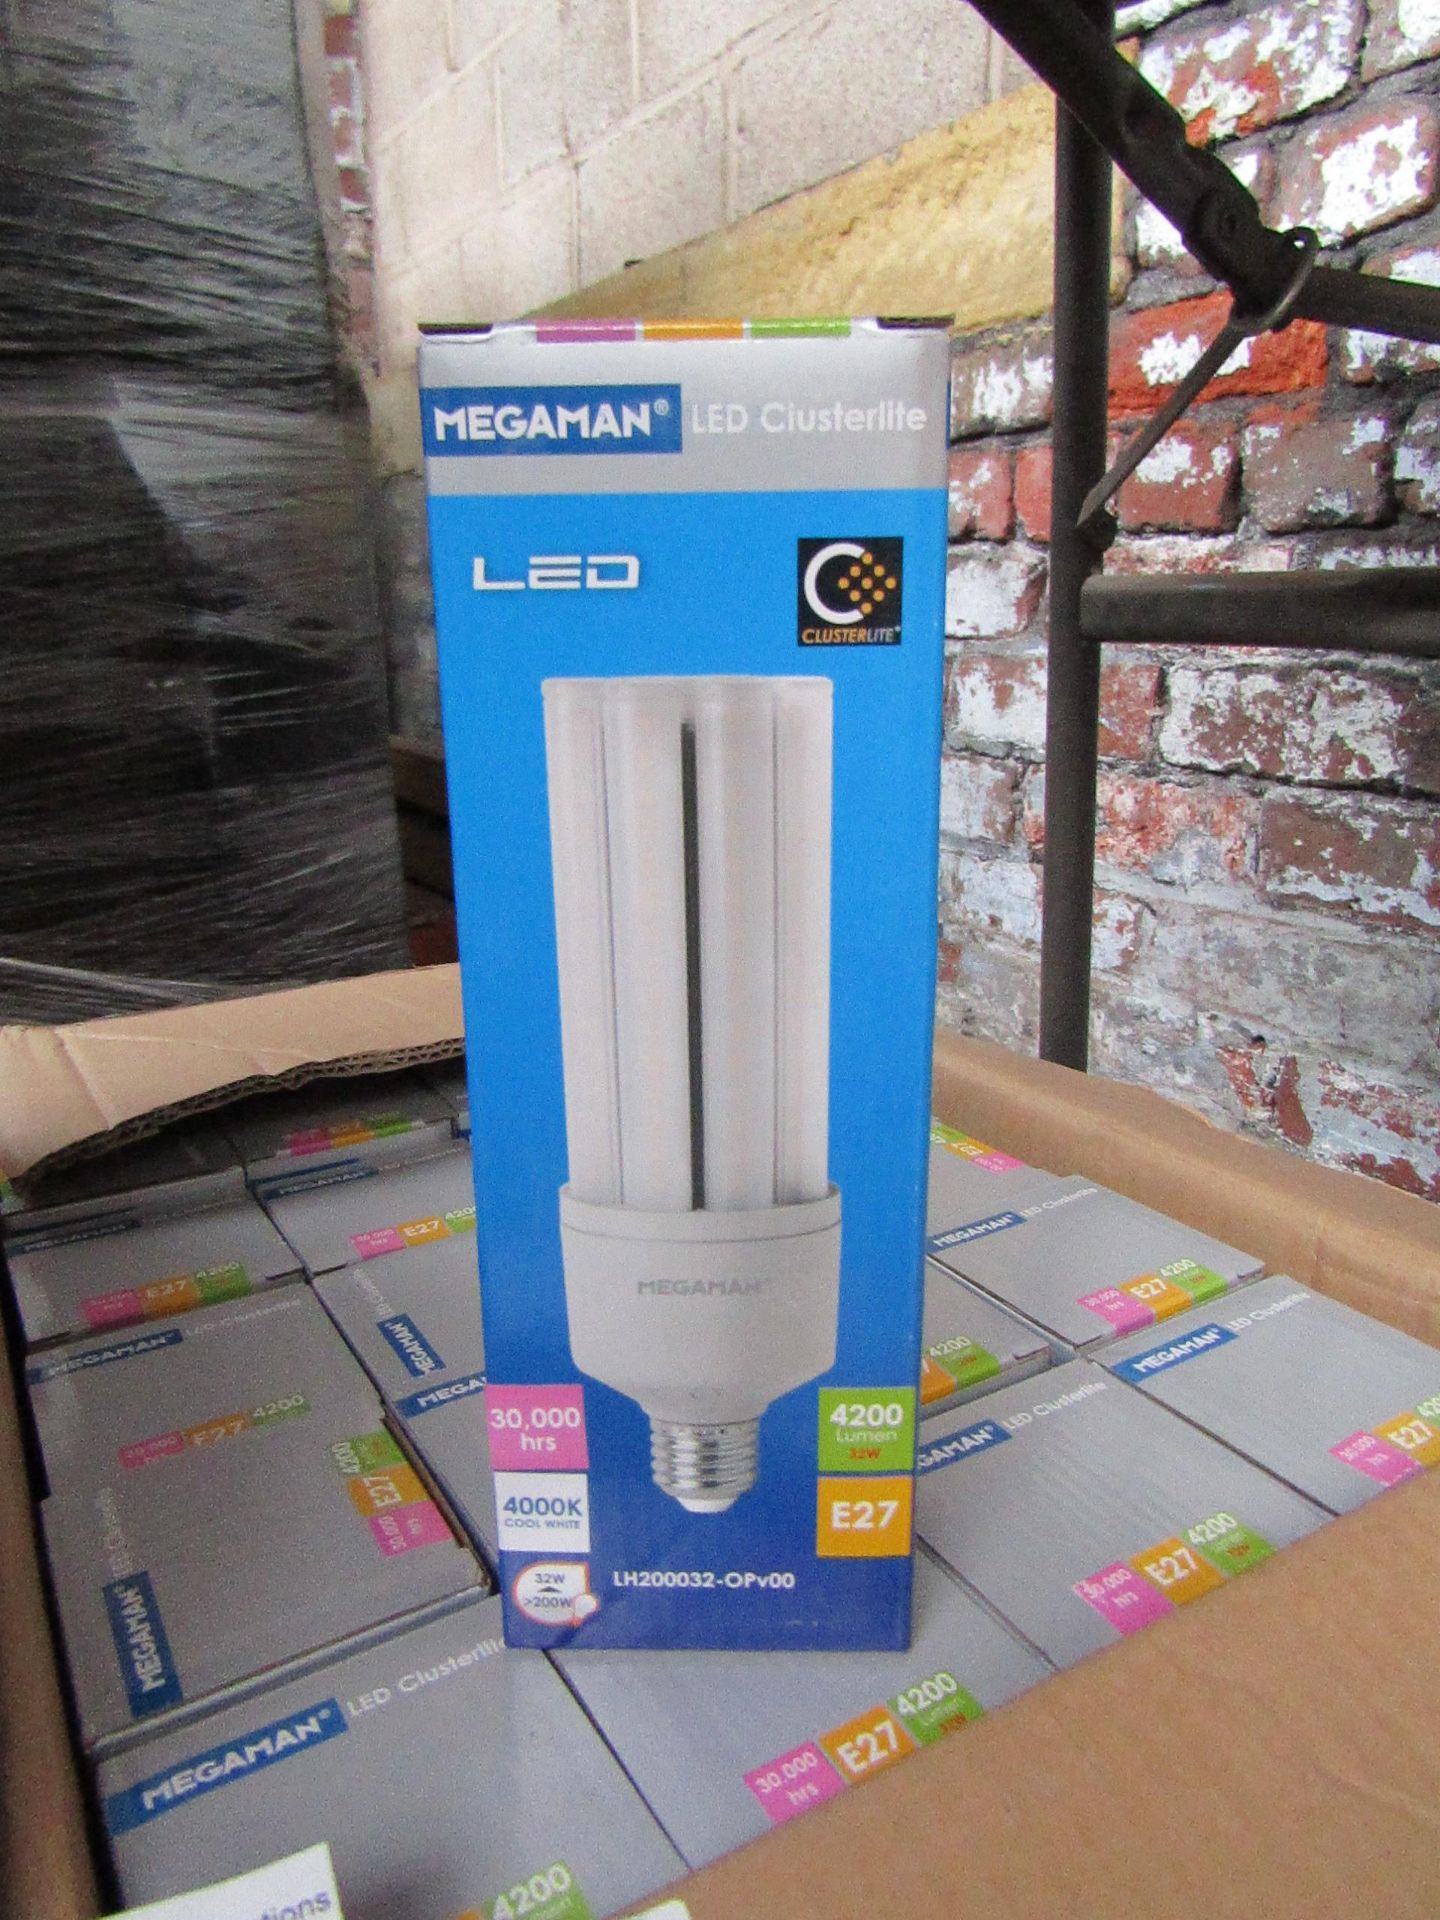 1x Megaman LED Clusterlite bulb, new and boxed. 30,000Hrs / E27 / 4200 Lumens